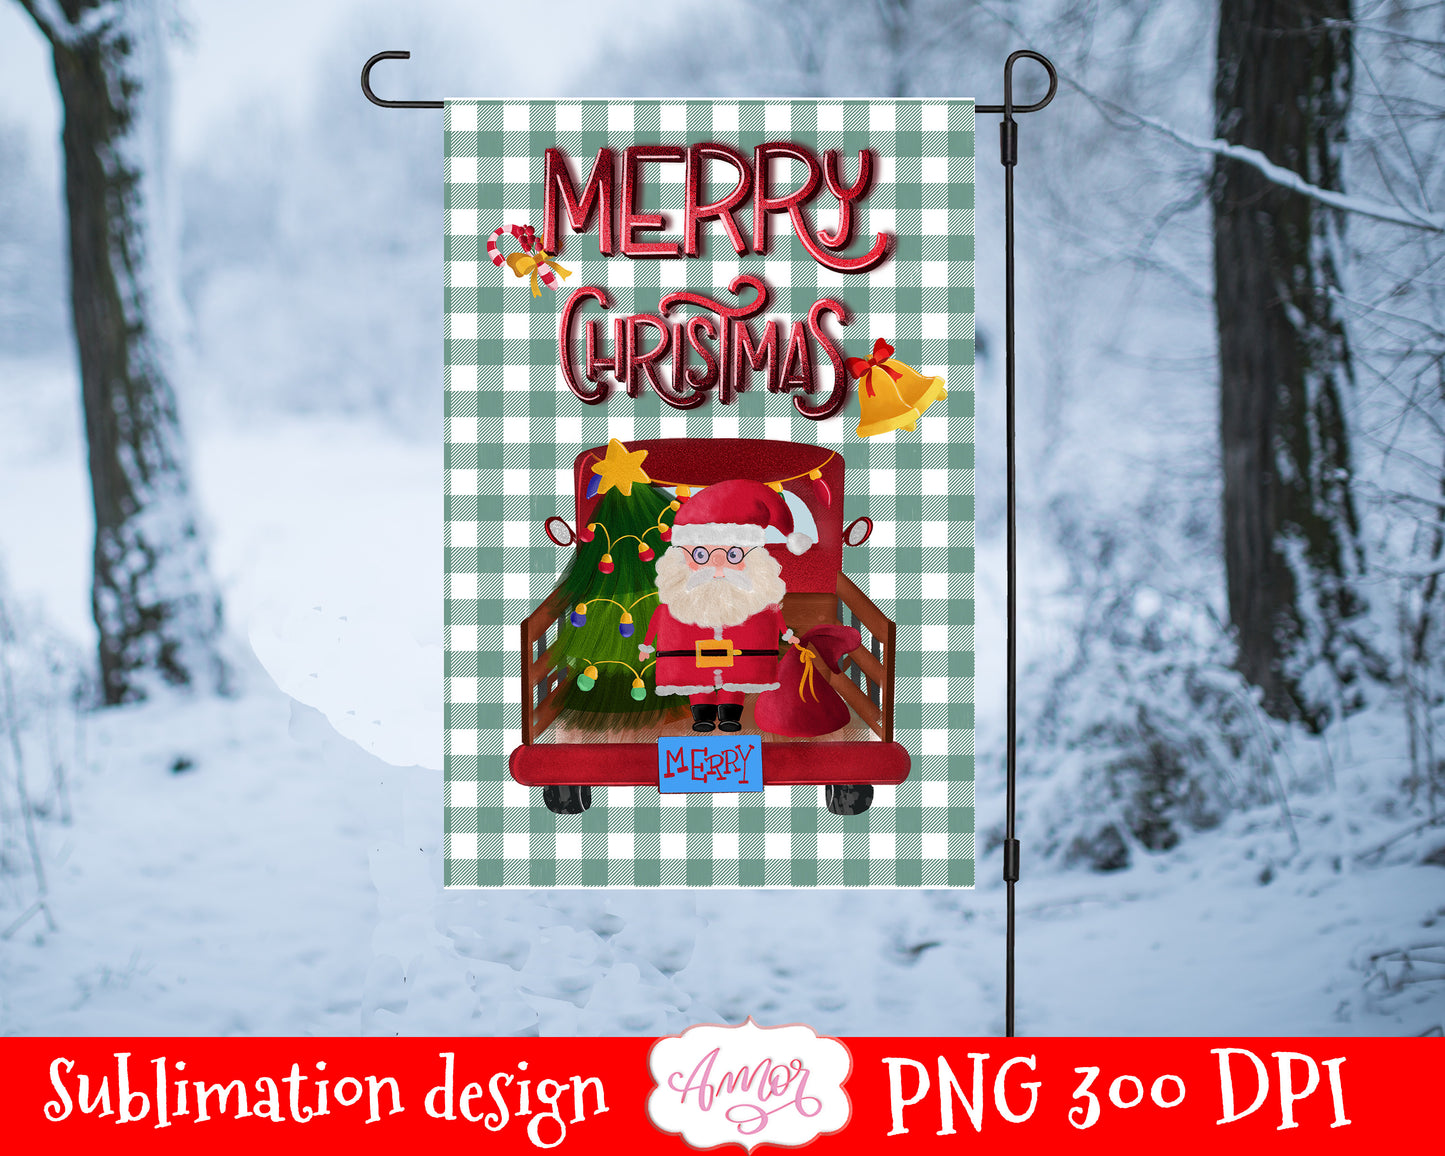 Christmas Garden Flag sublimation design with a cute Santa